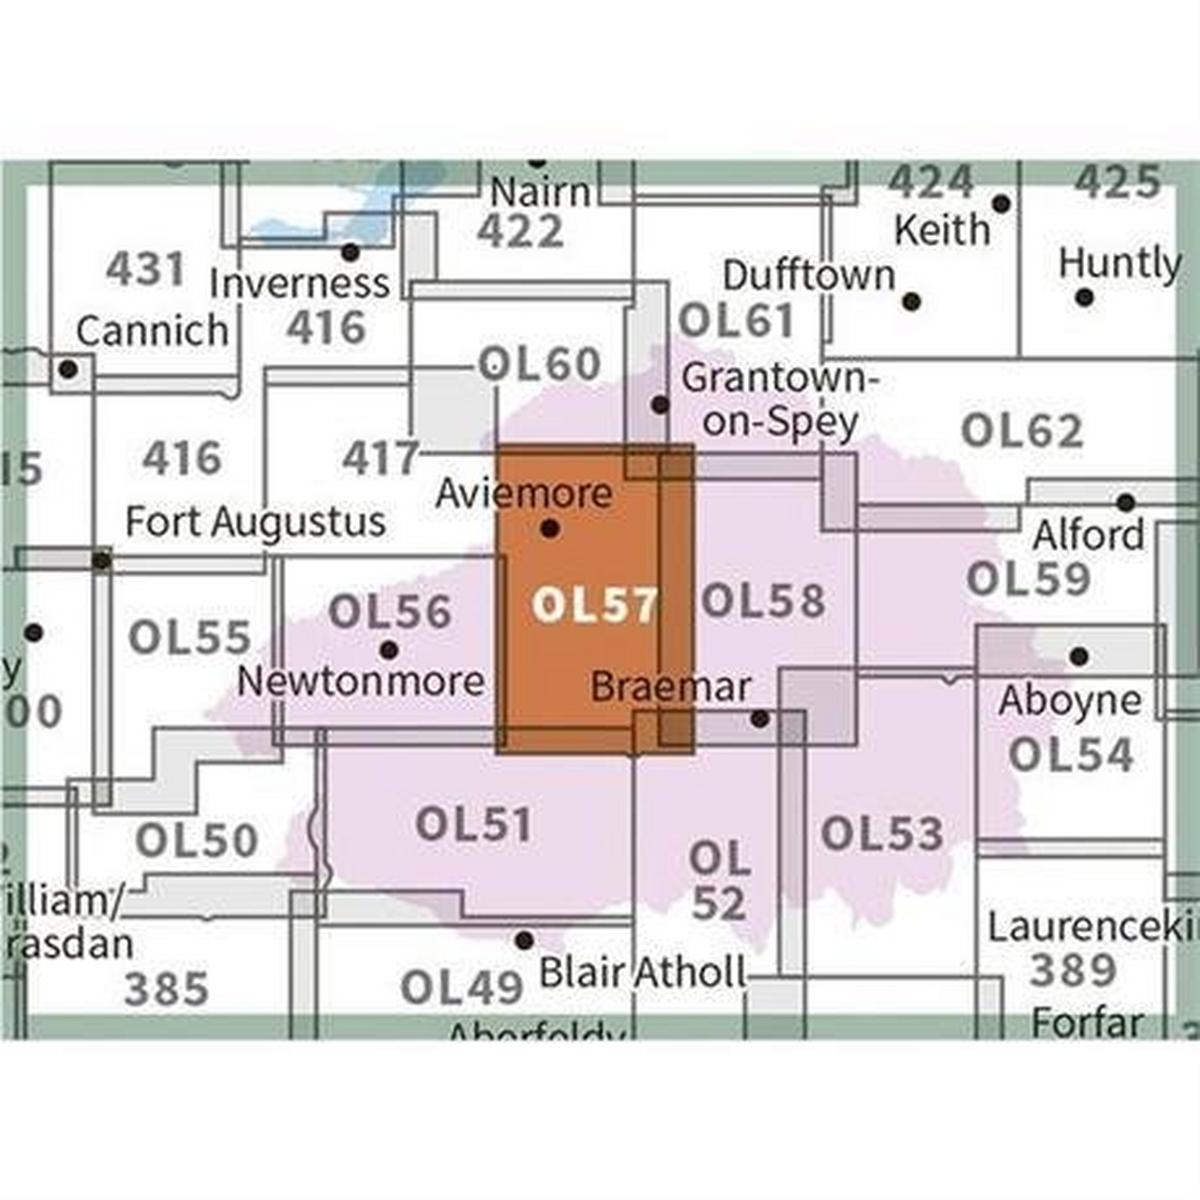 Ordnance Survey OS Explorer Map OL57 Cairngorm and Aviemore